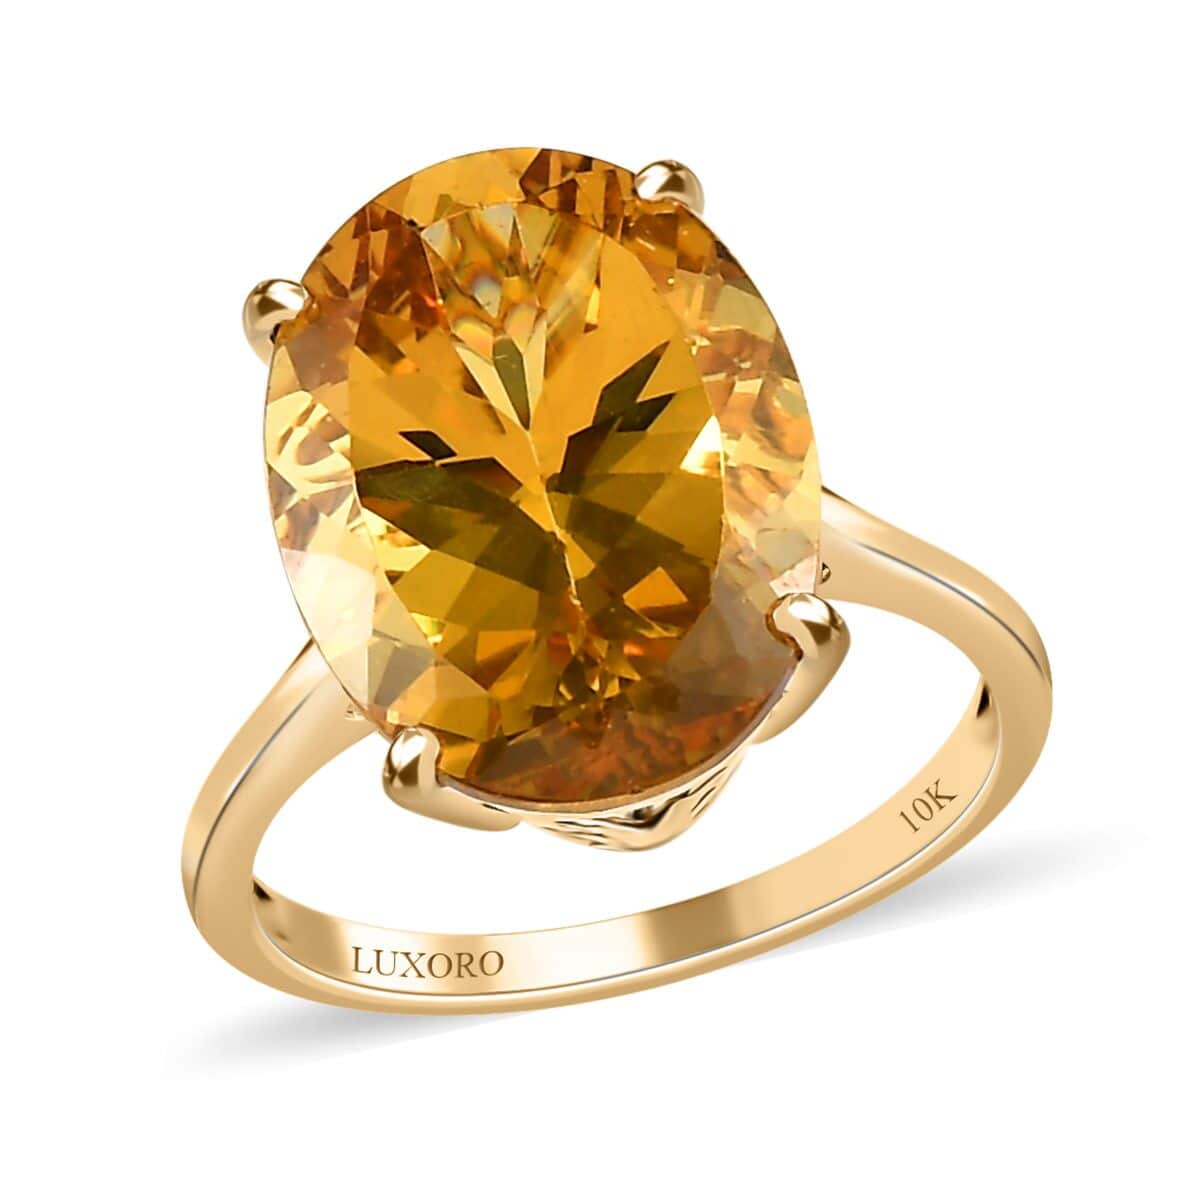 LUXORO 10K Yellow Gold Premium Brazilian Golden Apatite Solitaire Ring (Size 5.0) 2.30 Grams 11.10 ctw image number 0